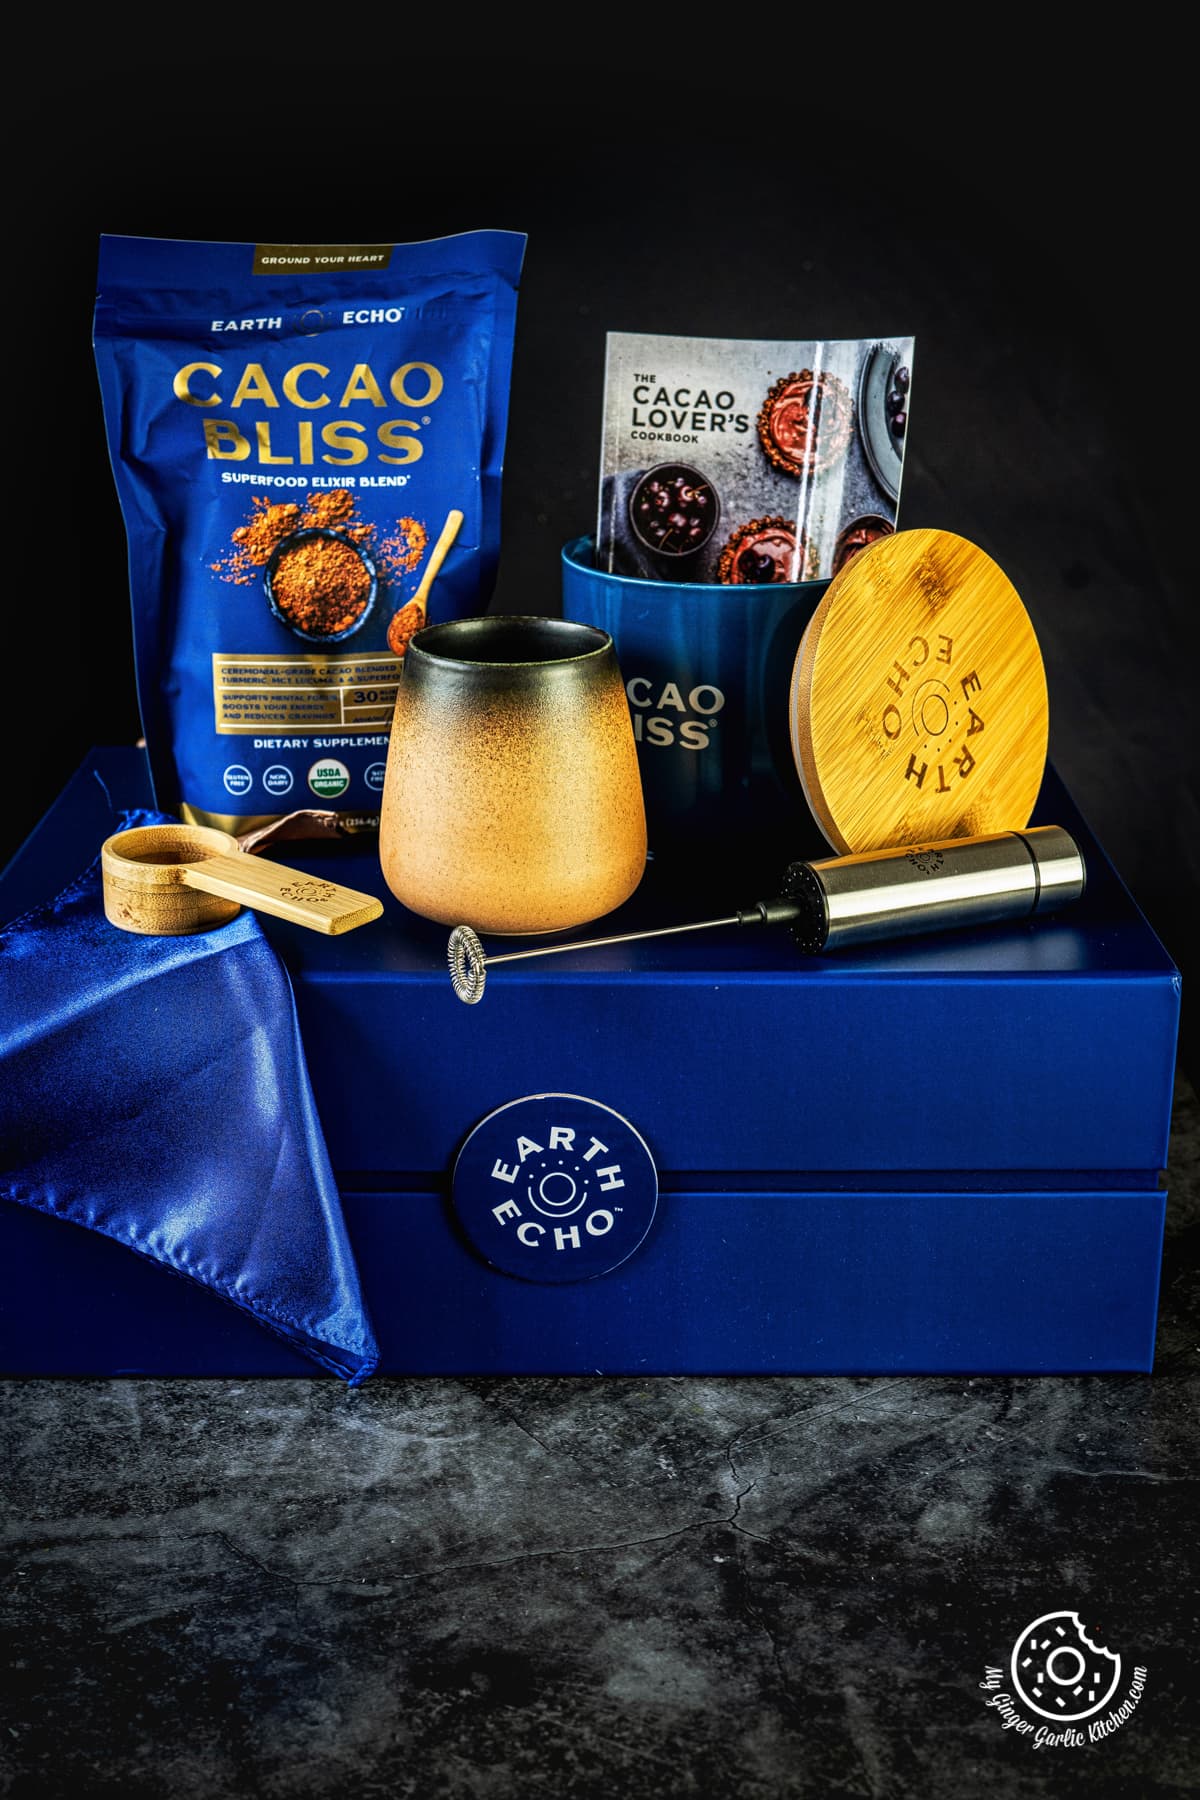 cacao bliss chocolate powder and mug kept on a blue box